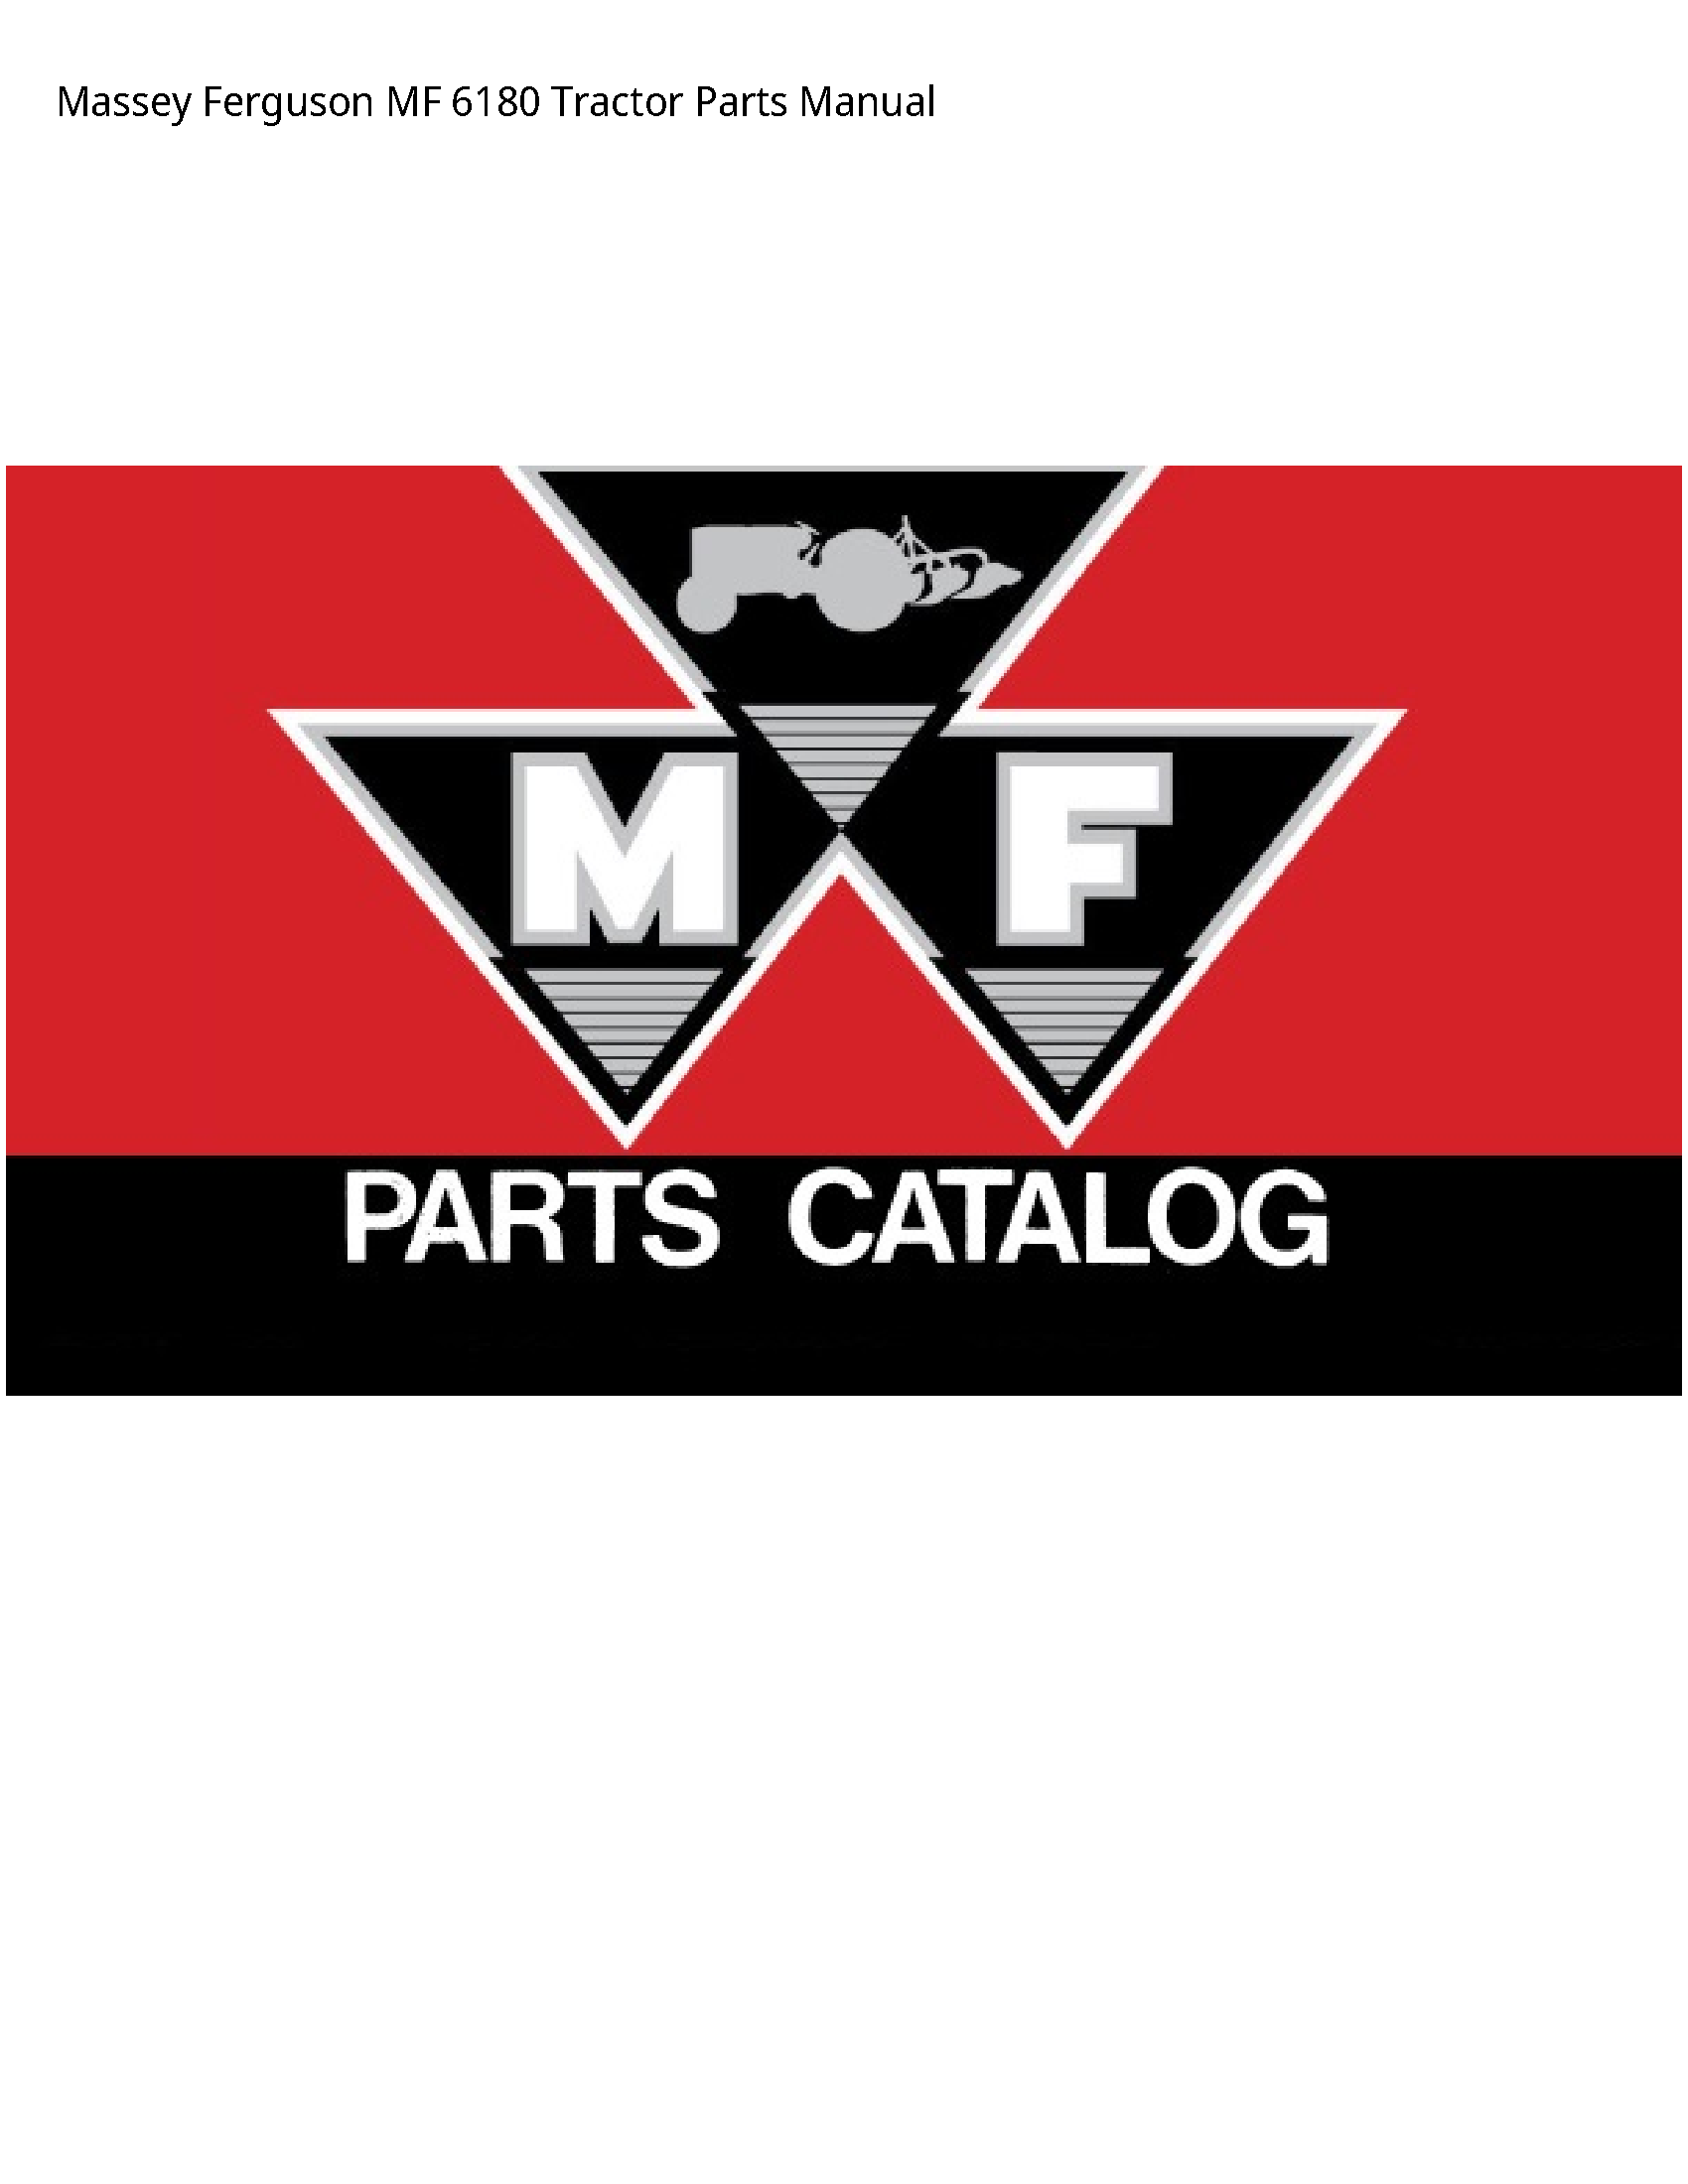 Massey Ferguson 6180 MF Tractor Parts manual